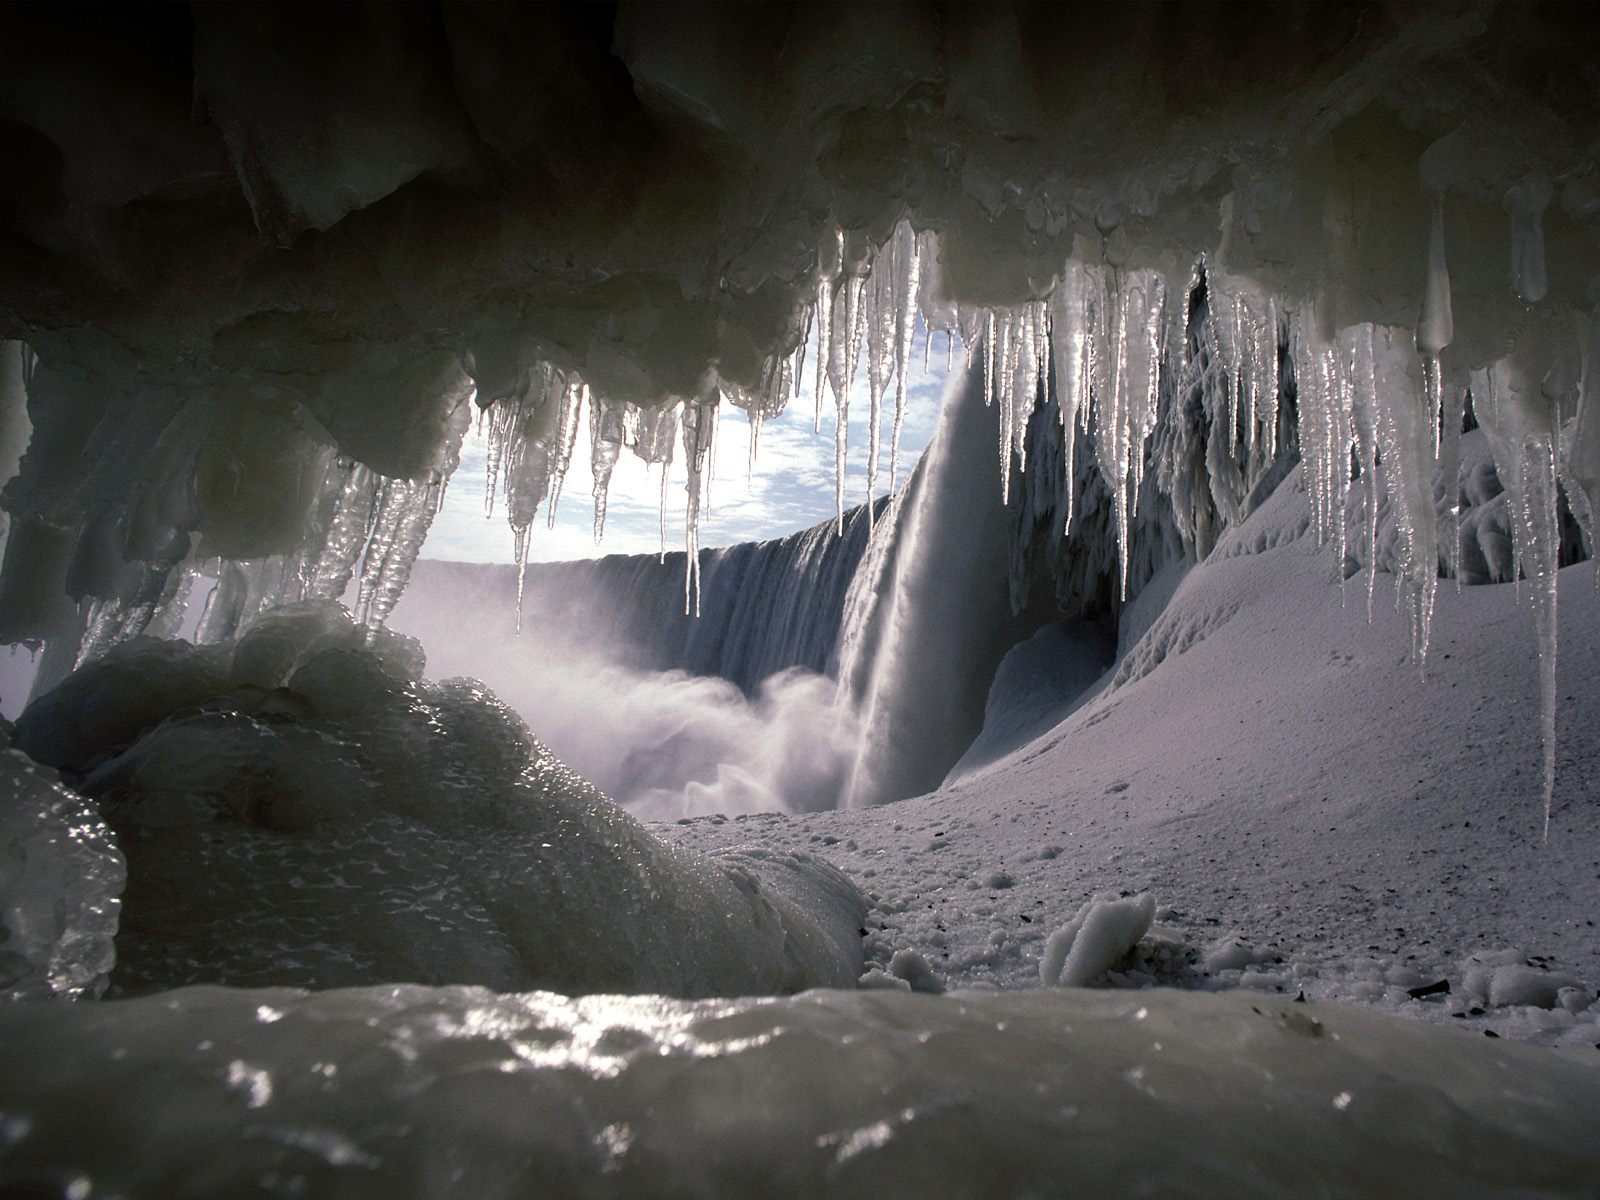 Ice cave with crashing waterfall.